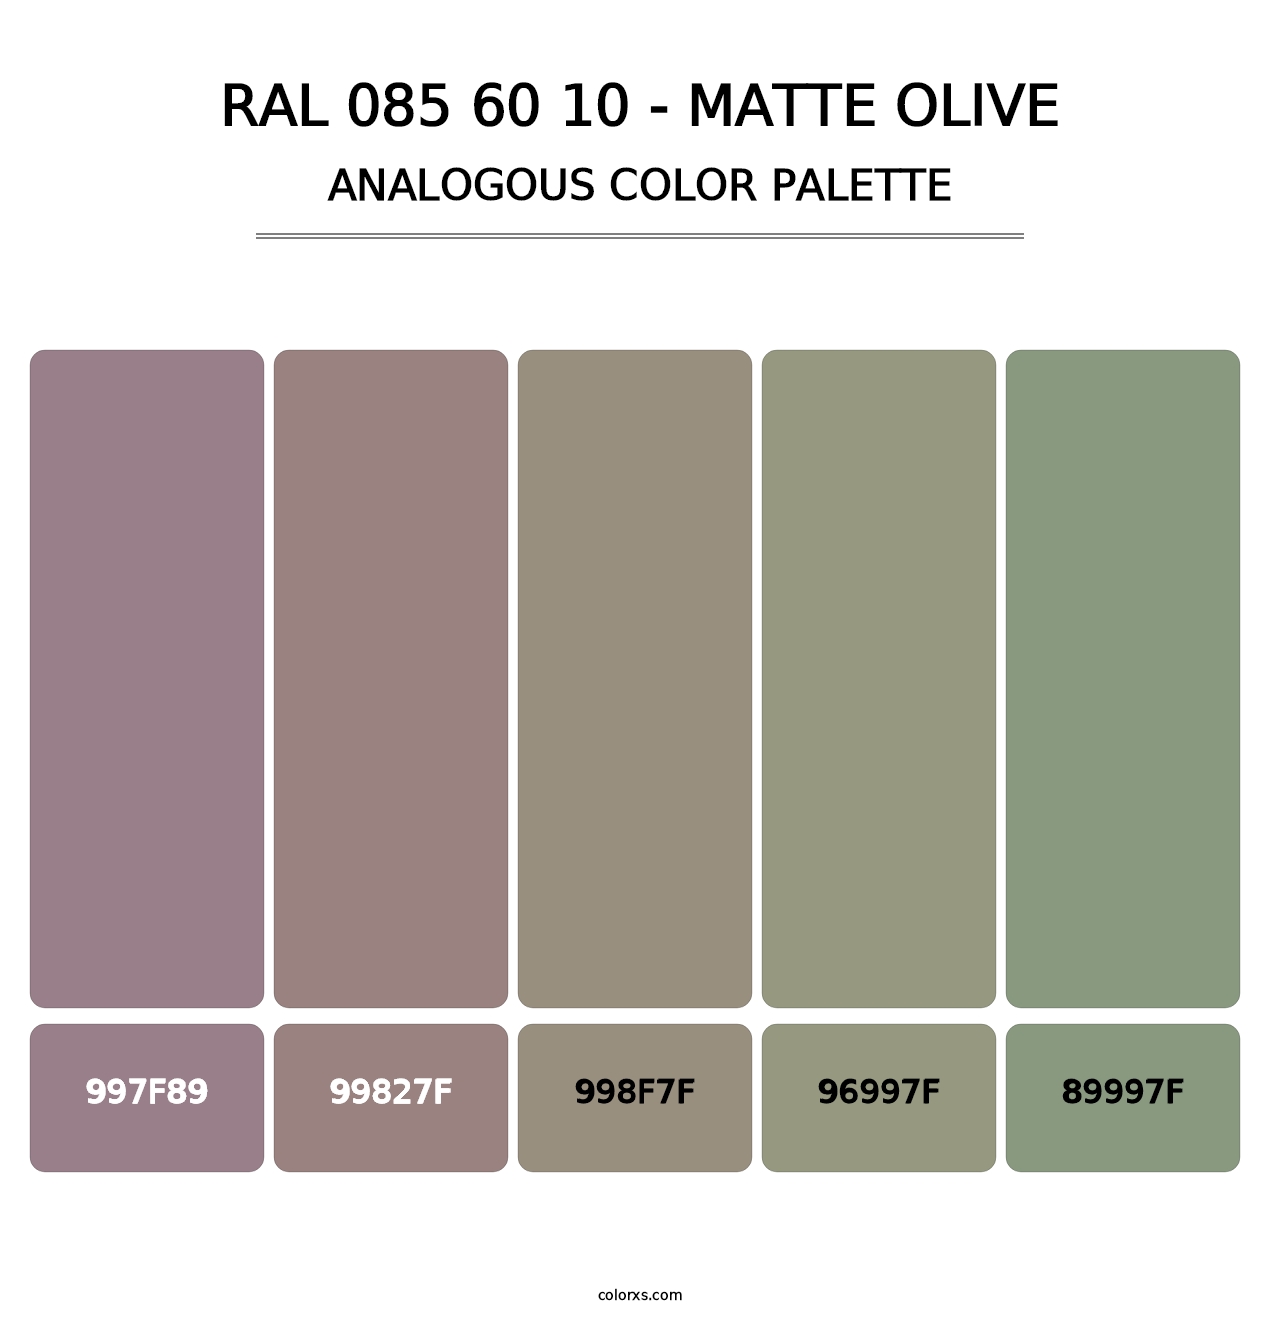 RAL 085 60 10 - Matte Olive - Analogous Color Palette